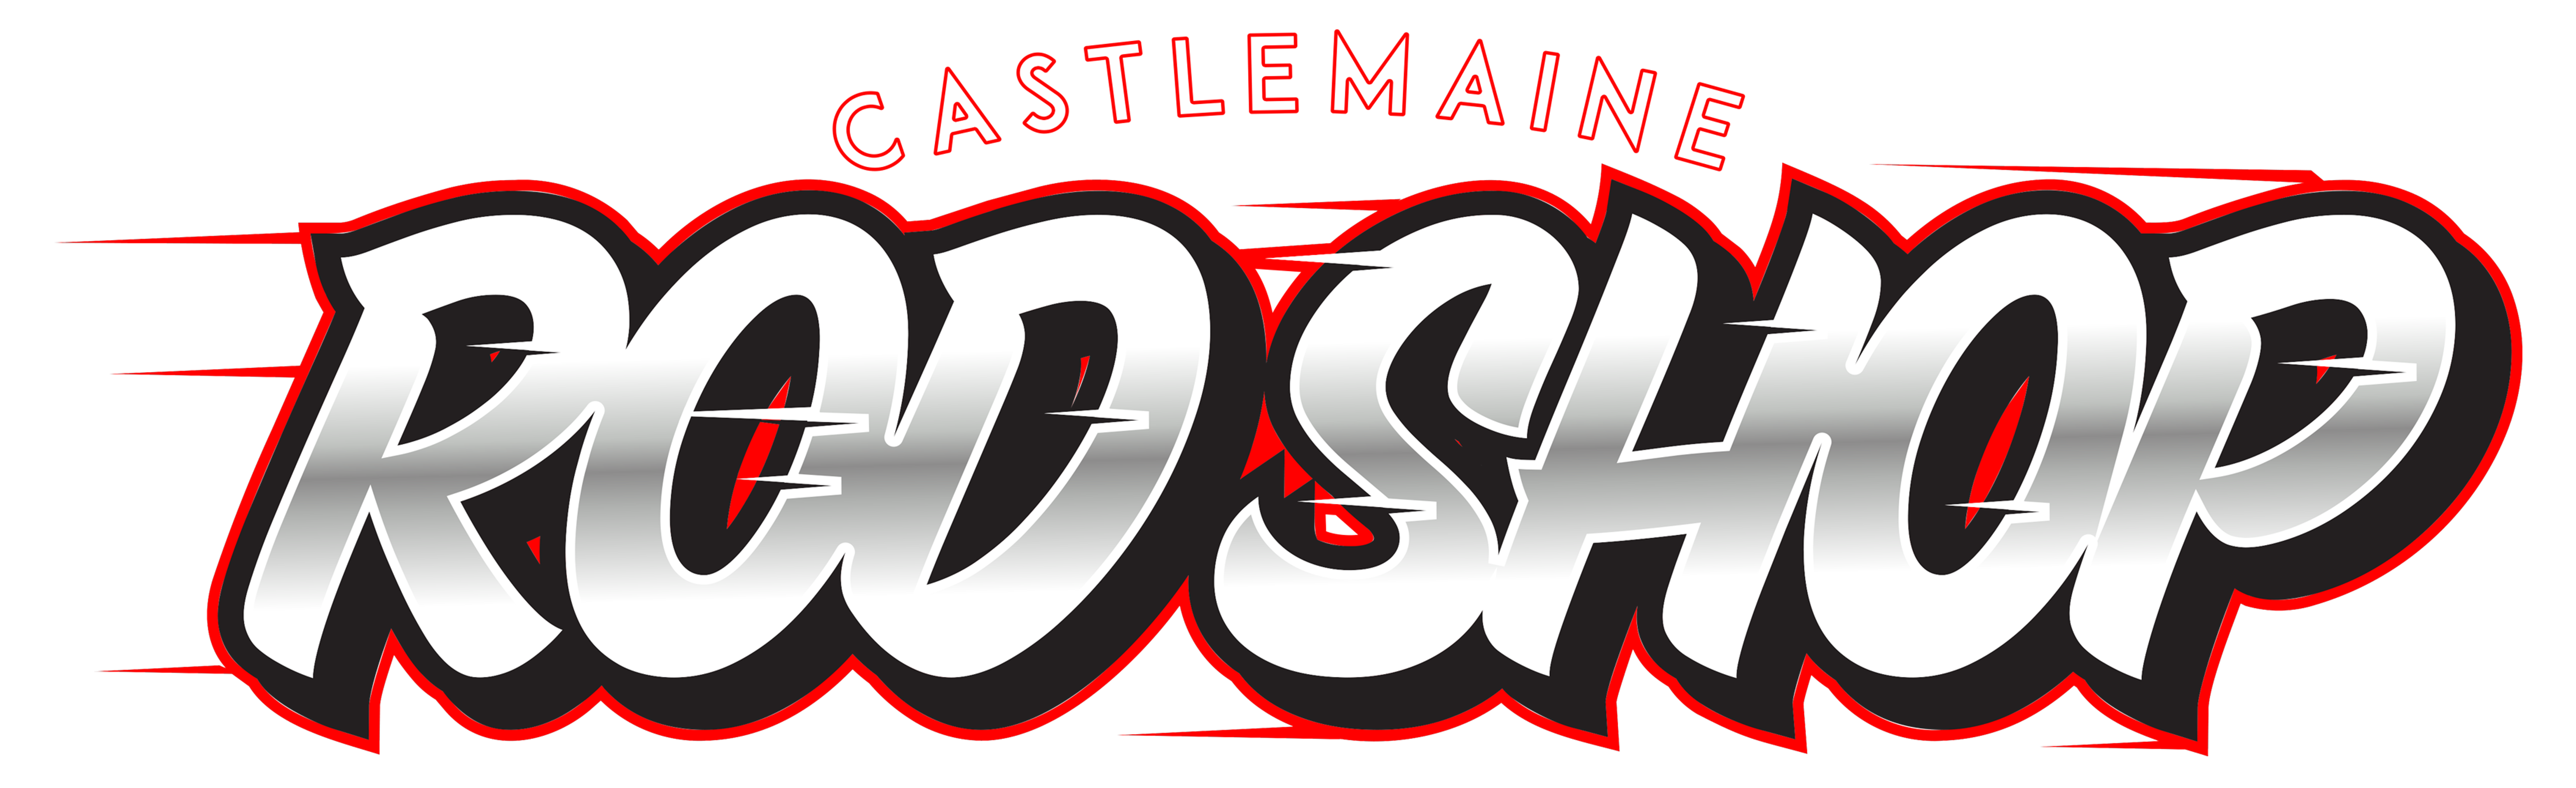 Castlemaine Rod Shop logo